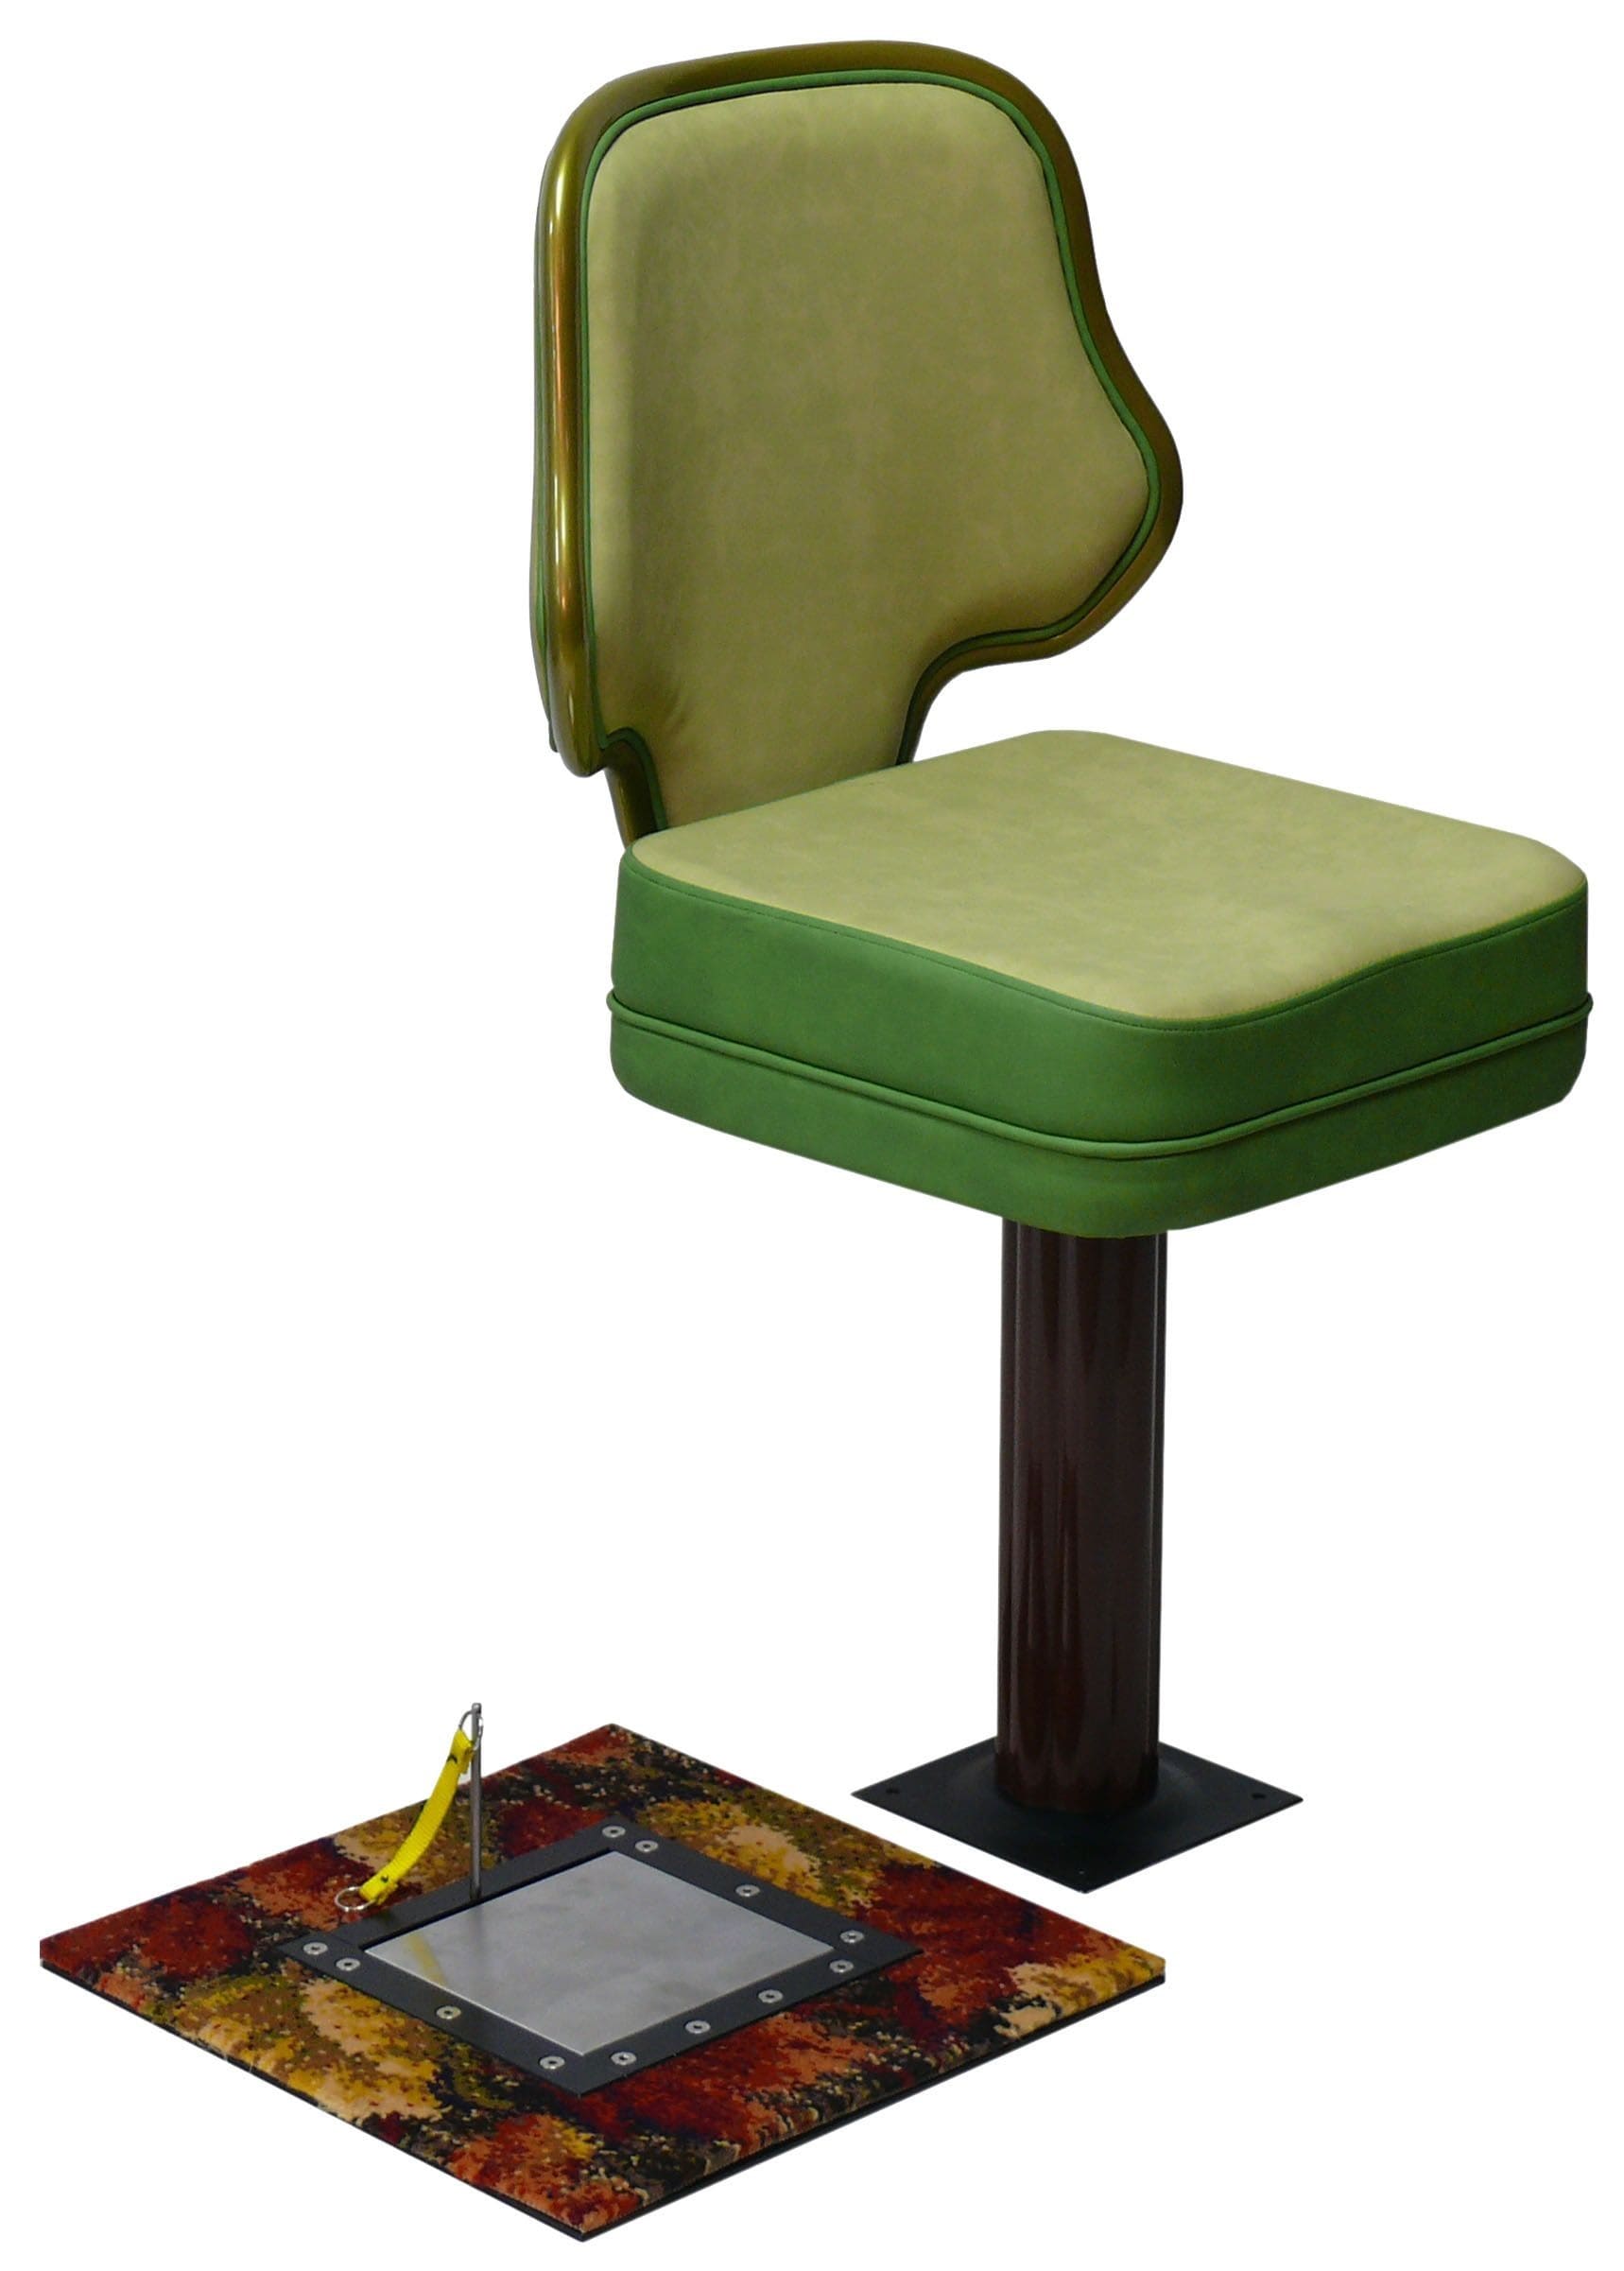 Casino quick release slot machine stool